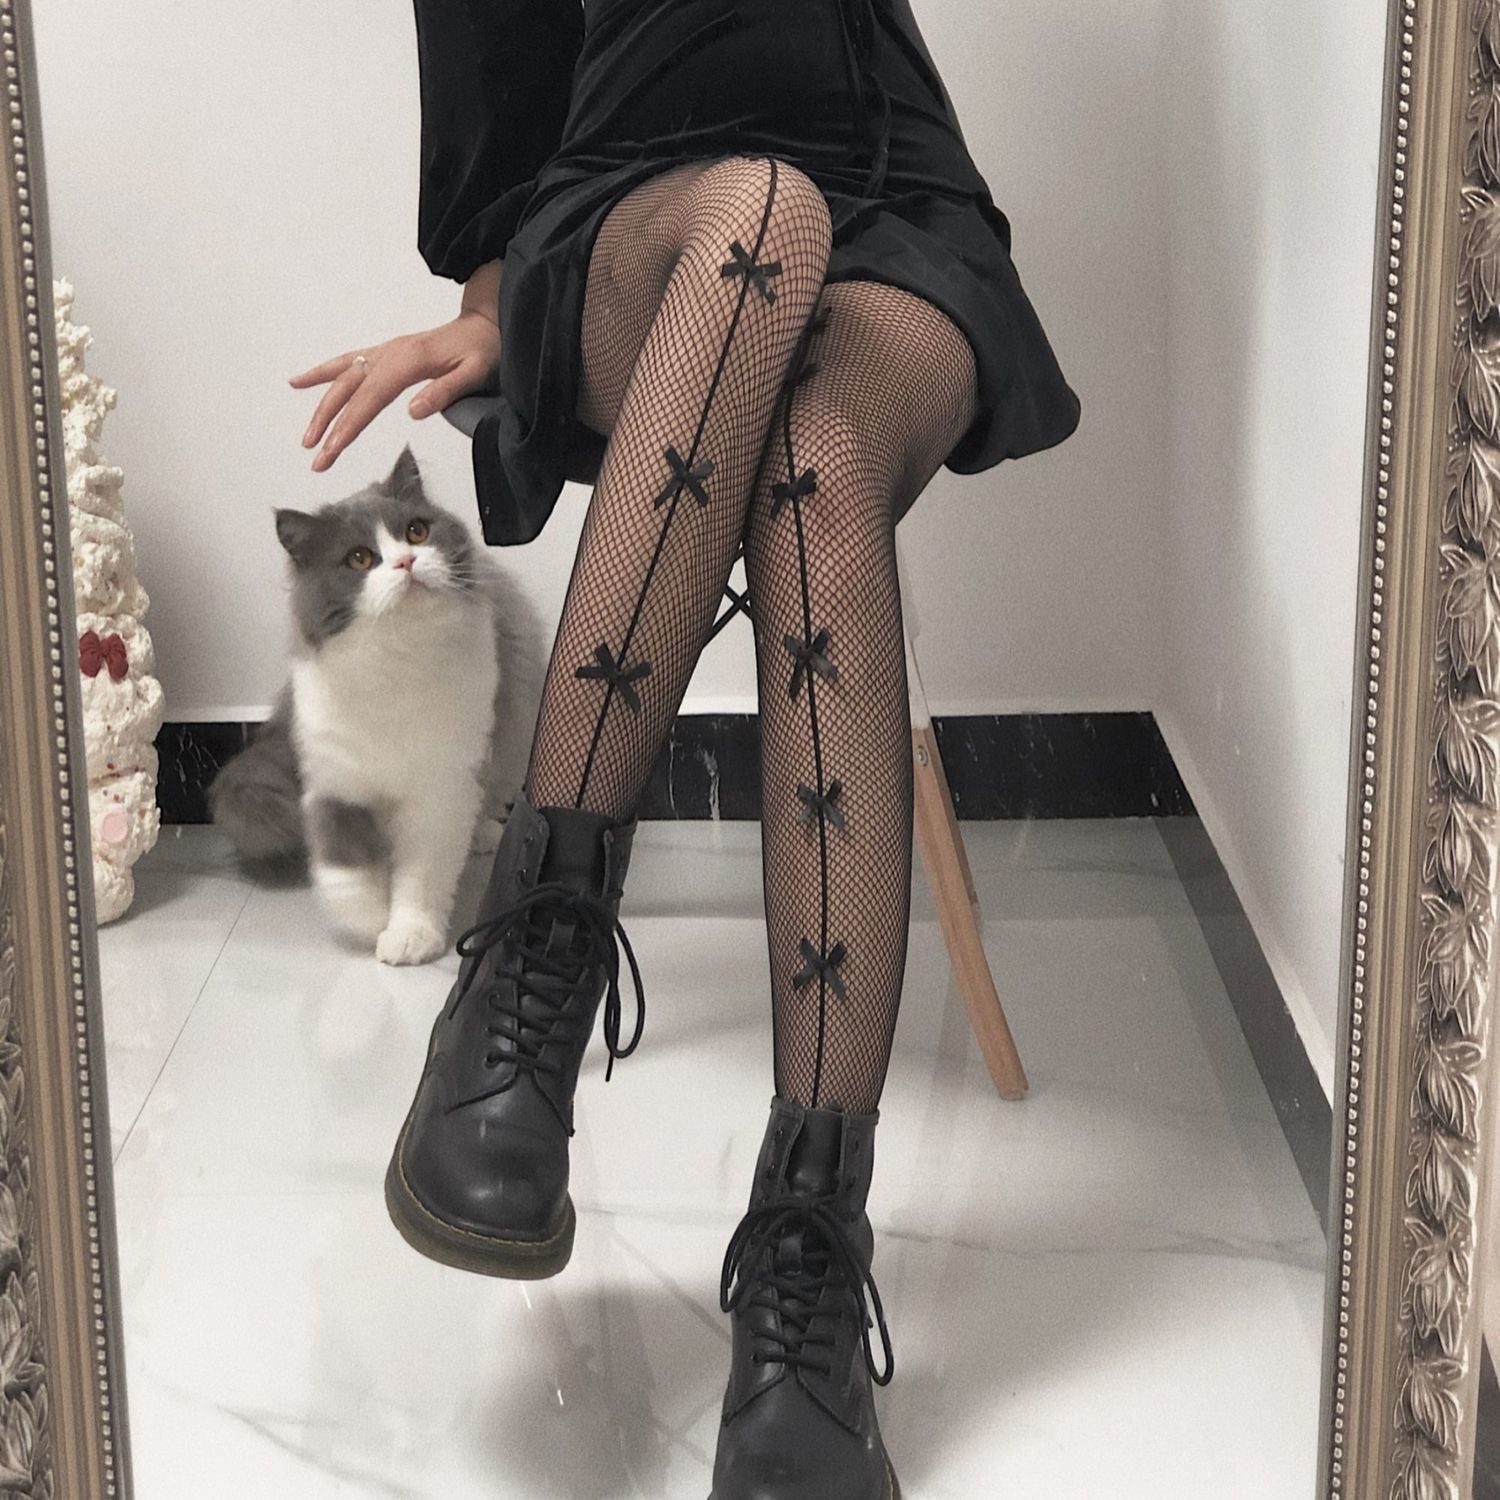 Black Fishnet Pantyhose With Bows - Femboy Fashion